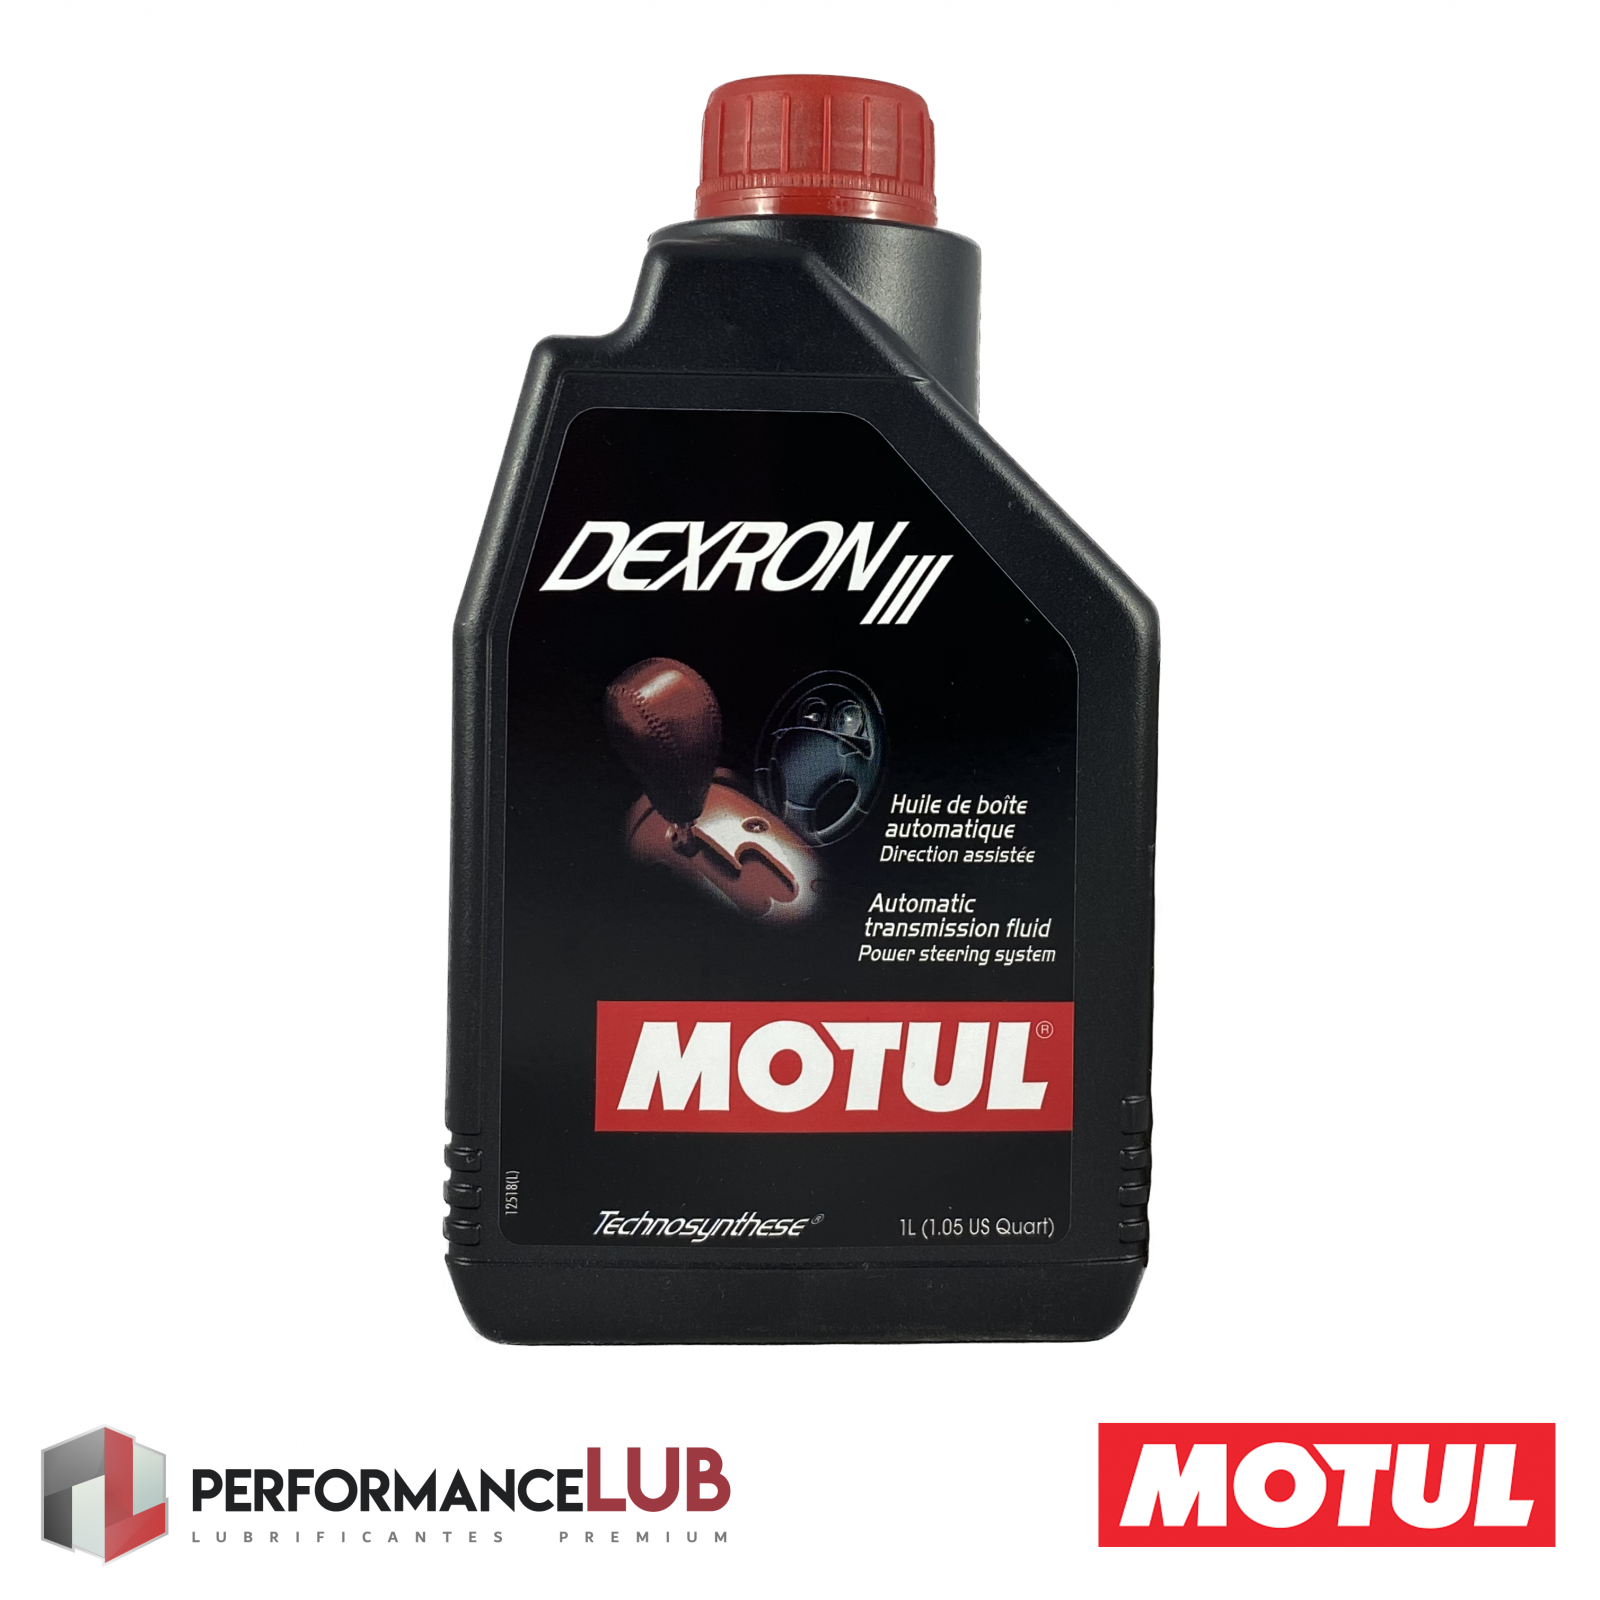 Motul Dexron III - 1 litro - PerformanceLUB Lubrificantes Premium